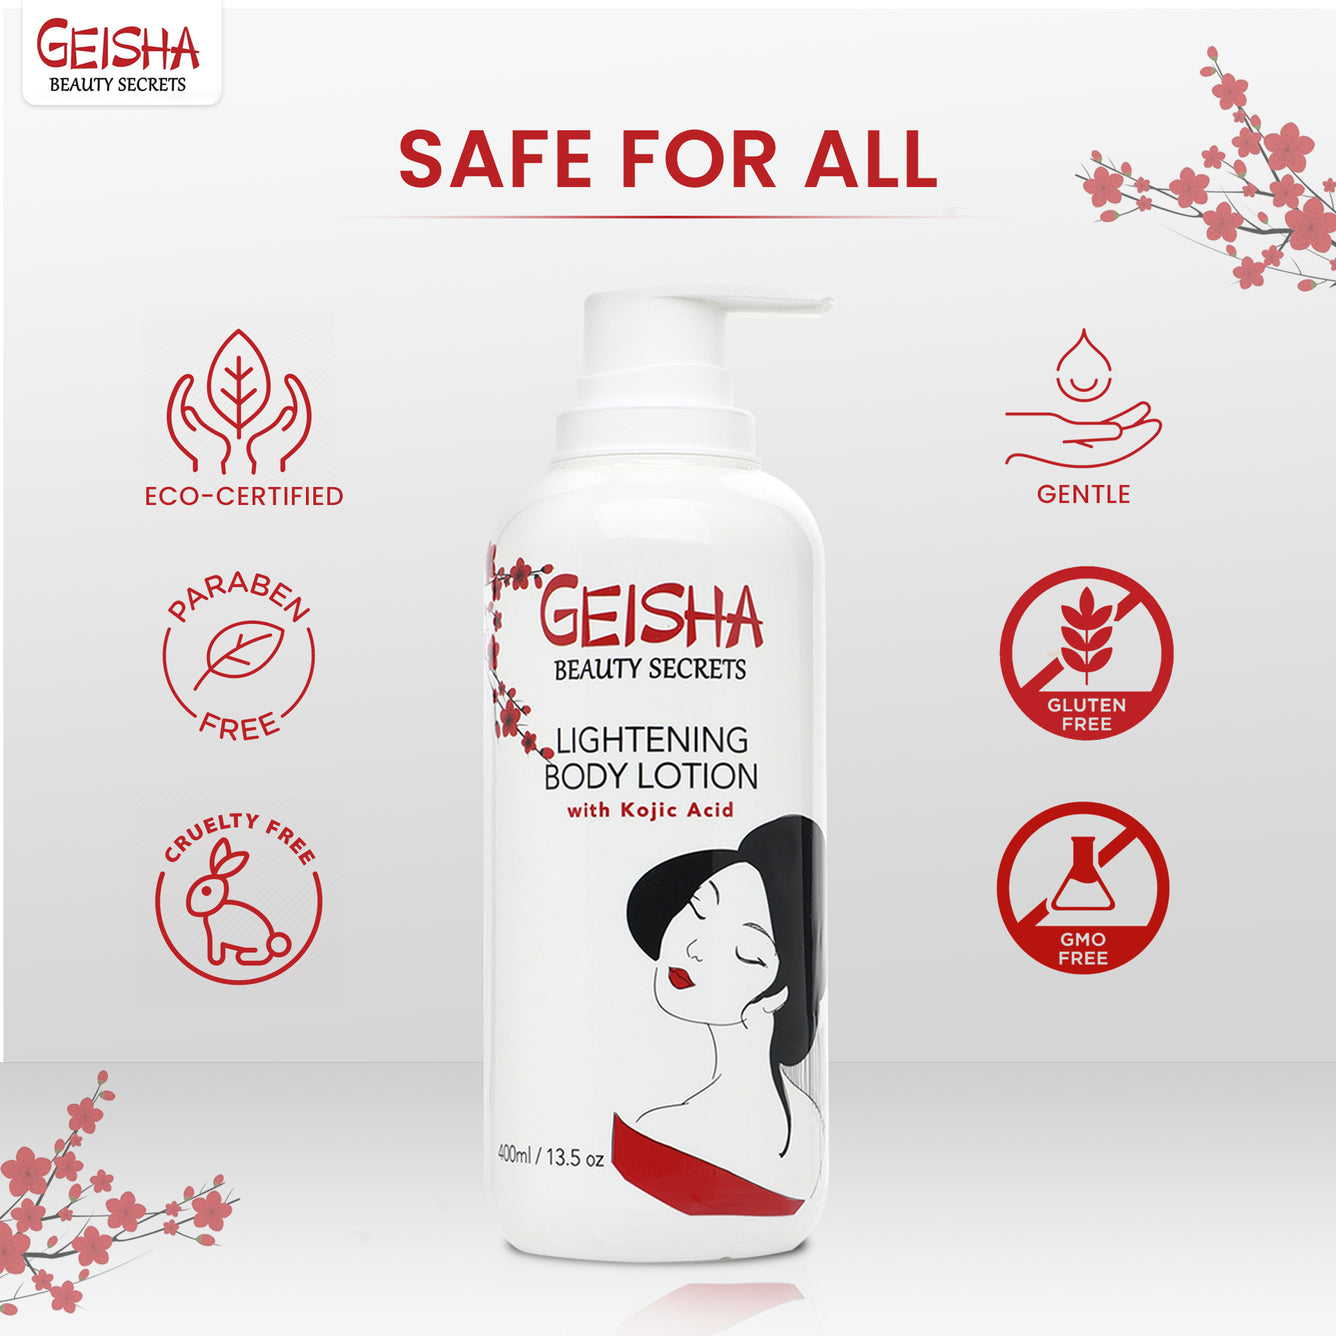 Geisha Beauty Secrets Brightening Body Lotion 400ml